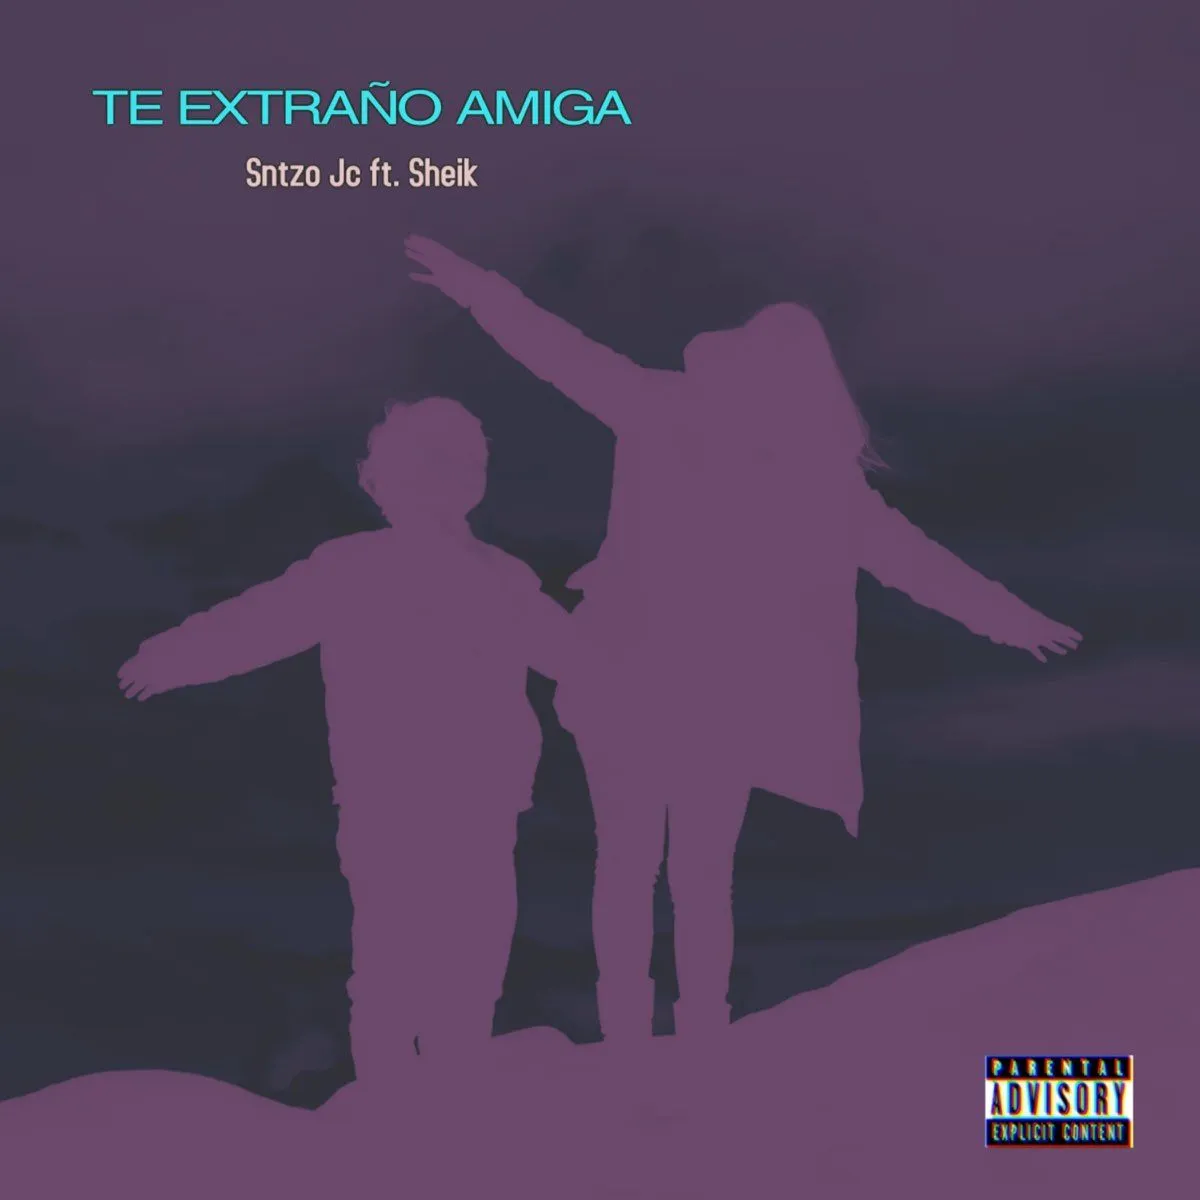 Te Extraño Amiga (feat. Sntzo Jc) - Single” álbum de Sheik en Apple Music